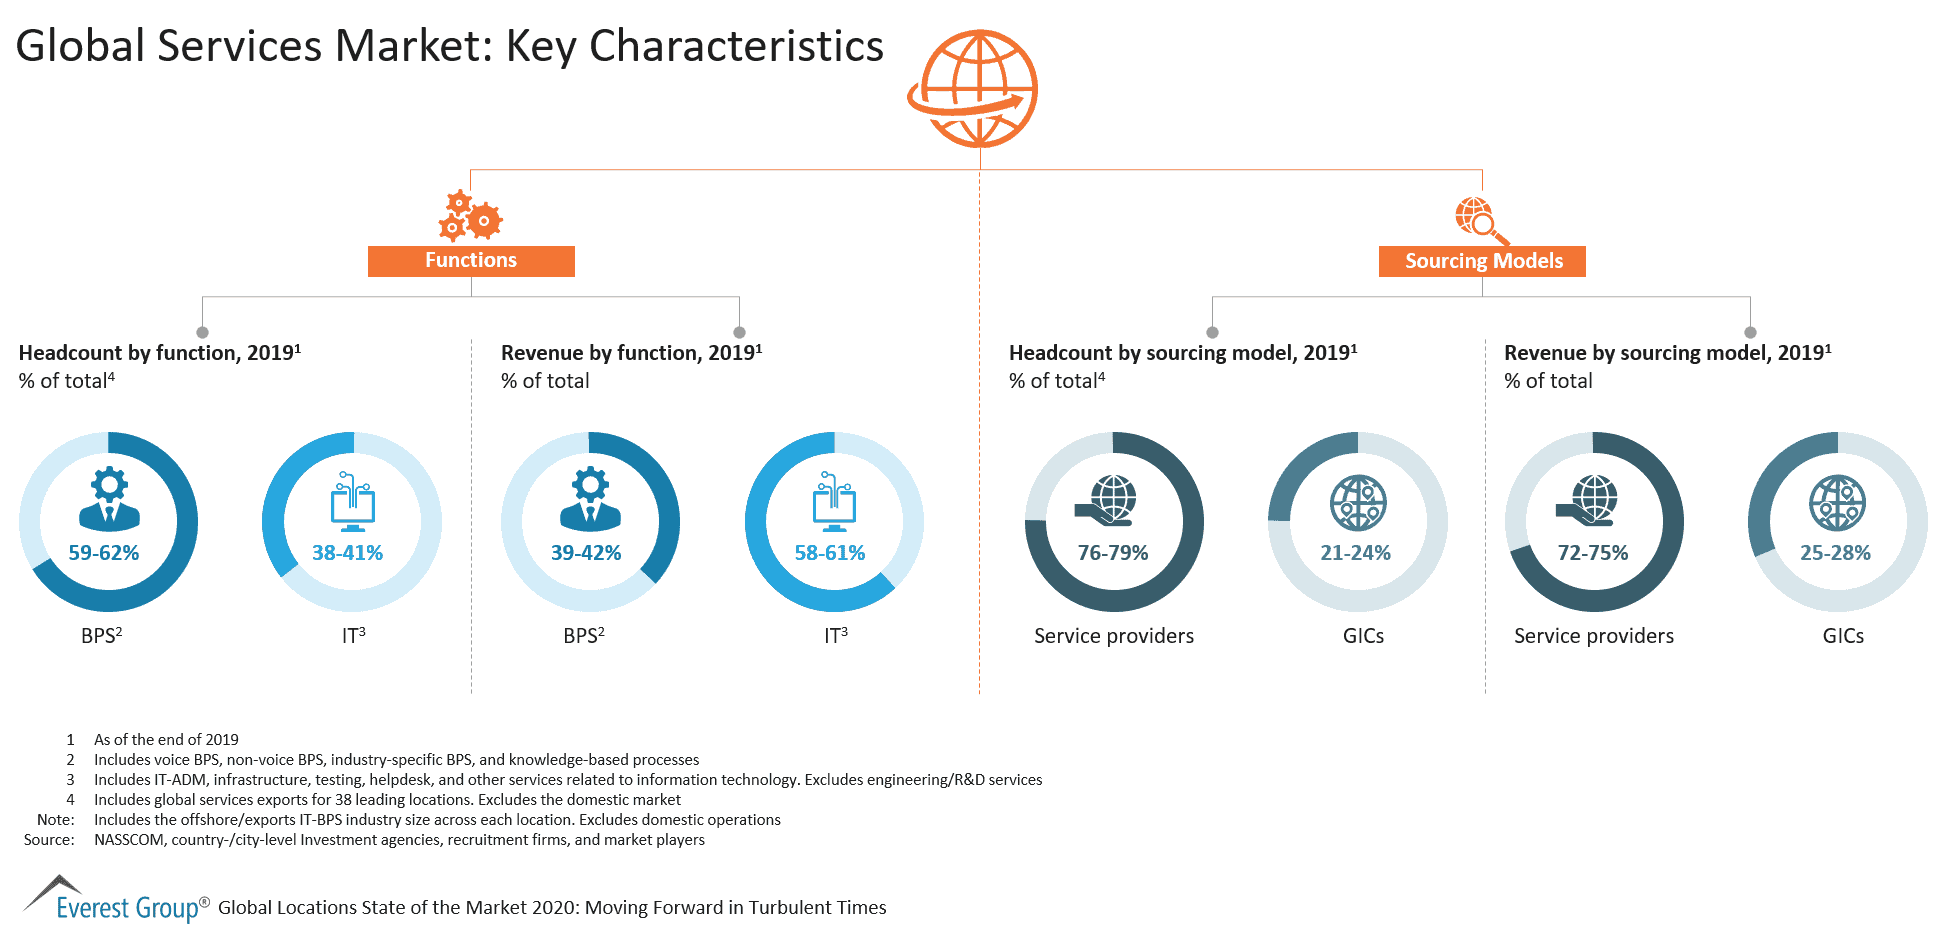 Global Services Market - Key Characteristics